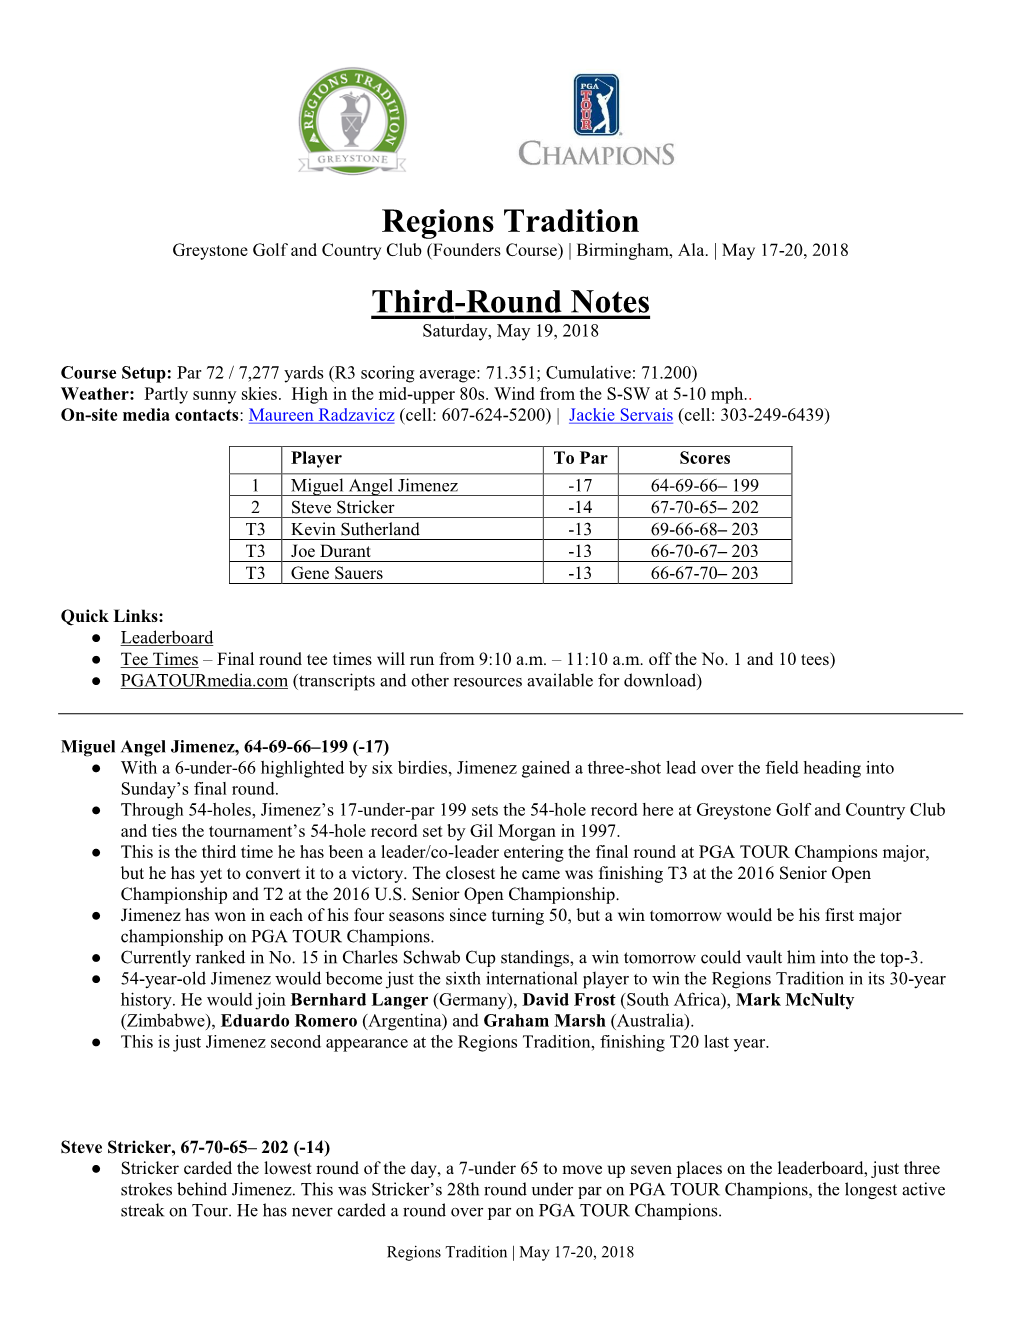 Regions Tradition Third-Round Notes